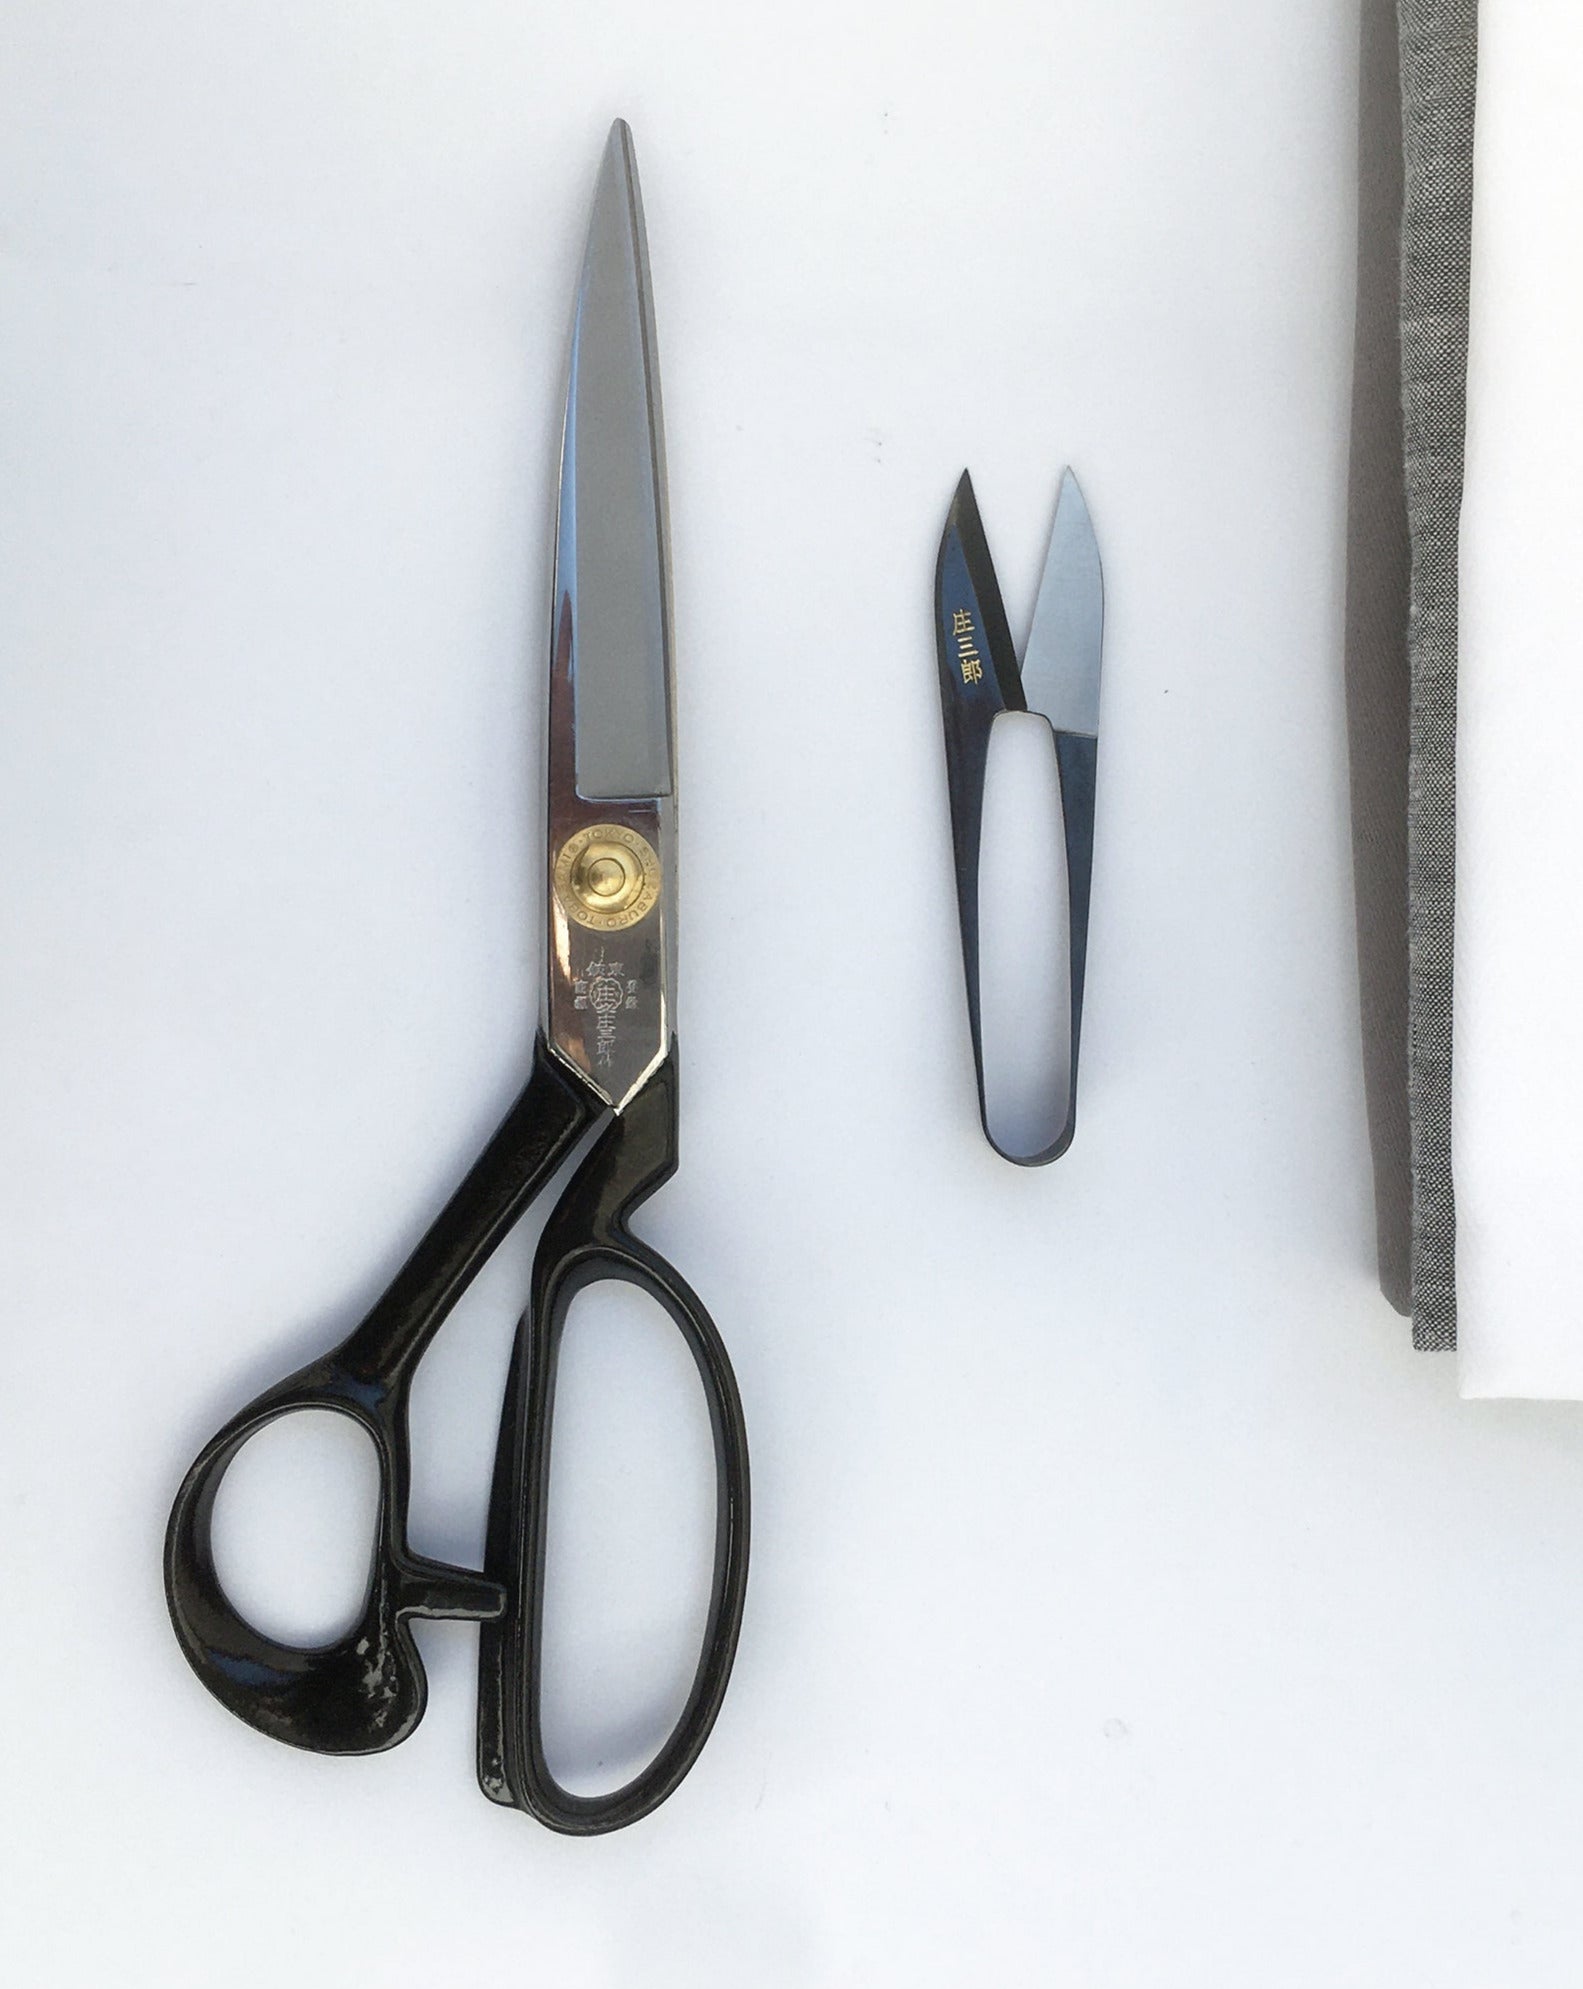 Metal Japanese Scissors and Thread Snips